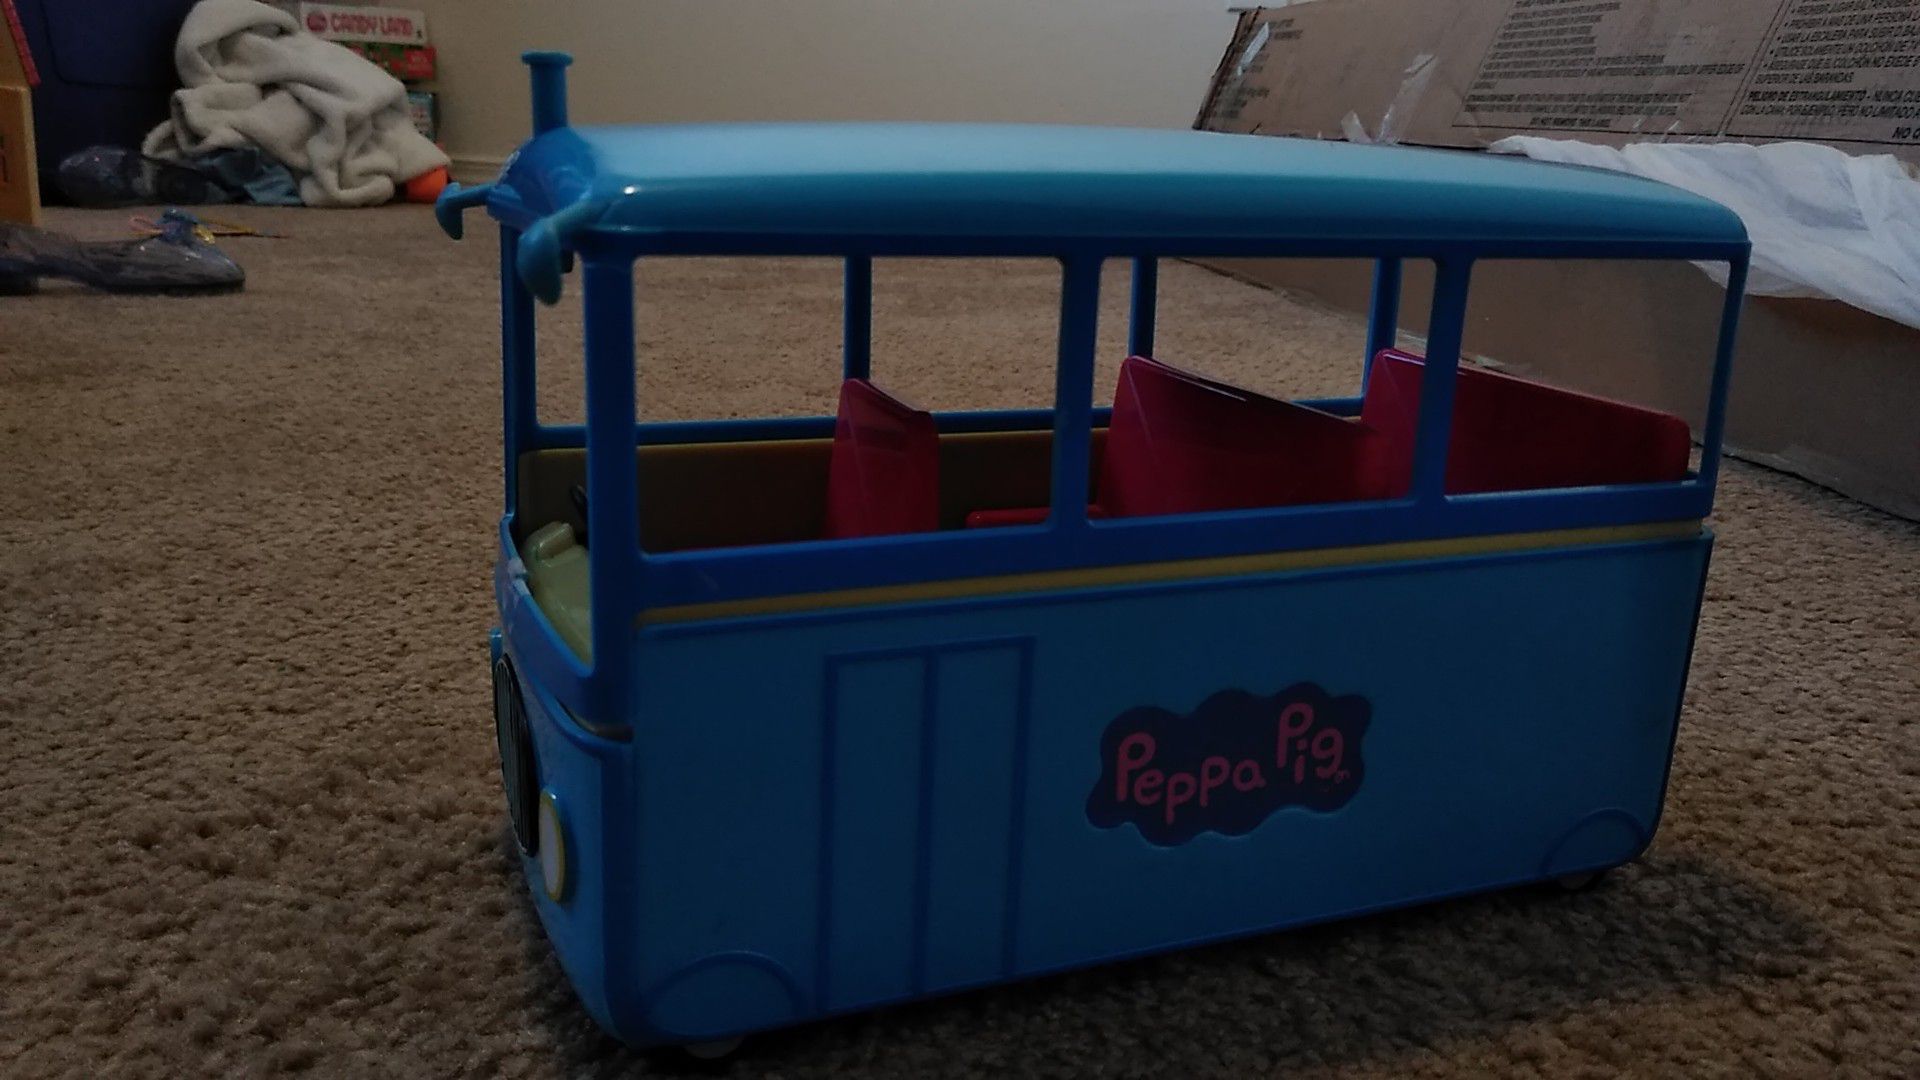 Peppa Pig bus with Blue dress Peppa